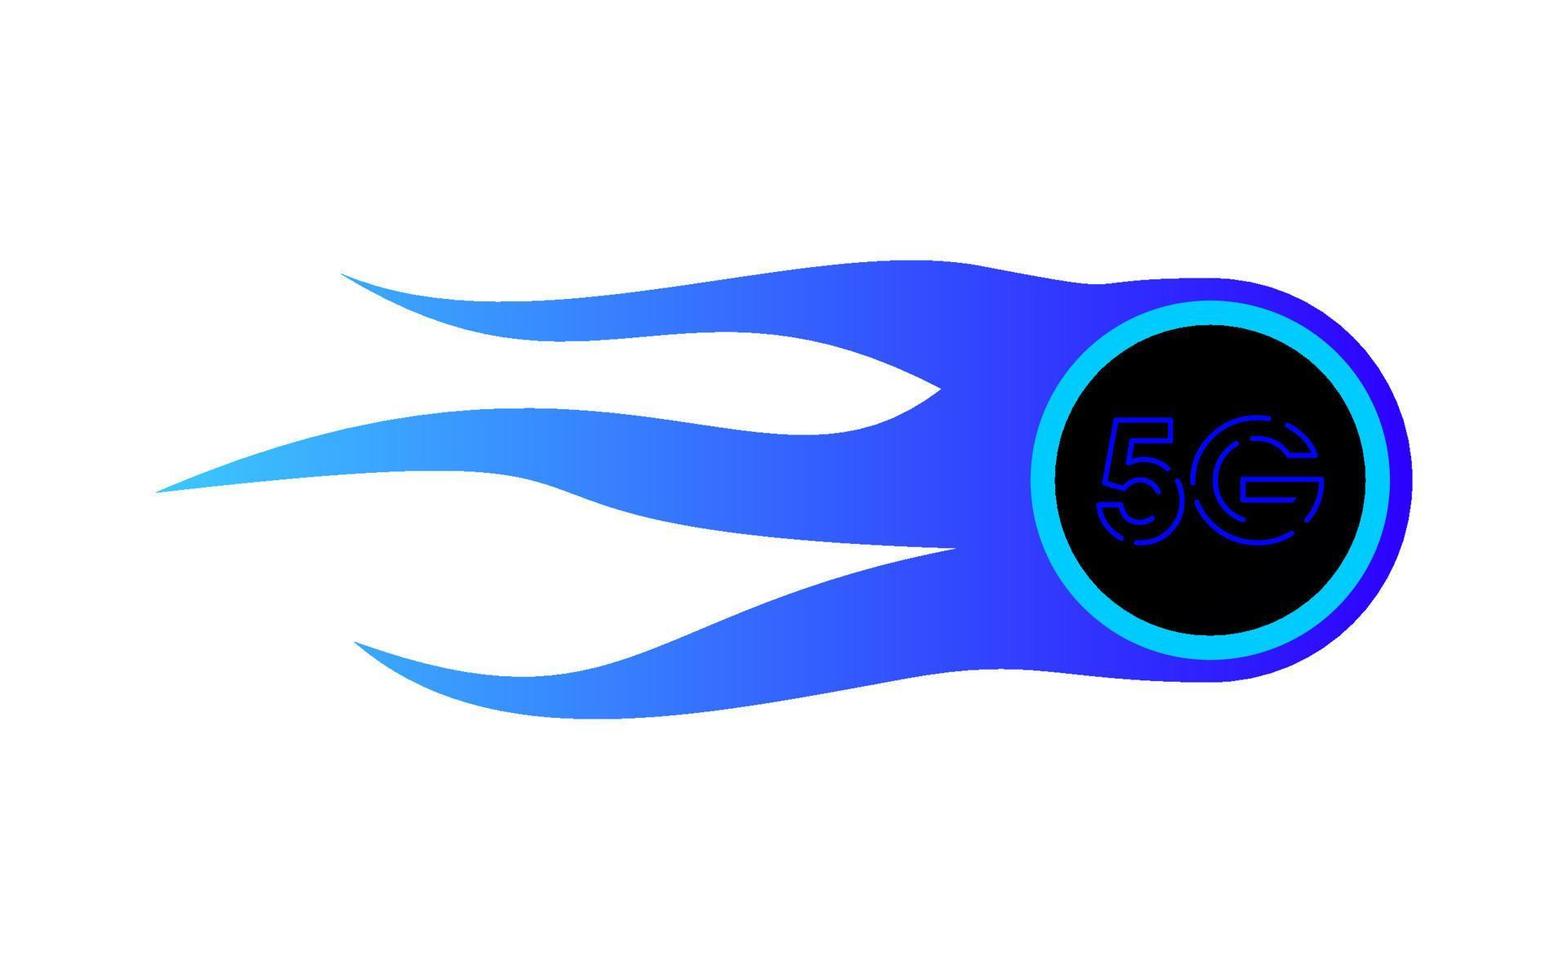 conexão de rede 5g super rápida, conceito de logotipo de bola de fogo. vetor